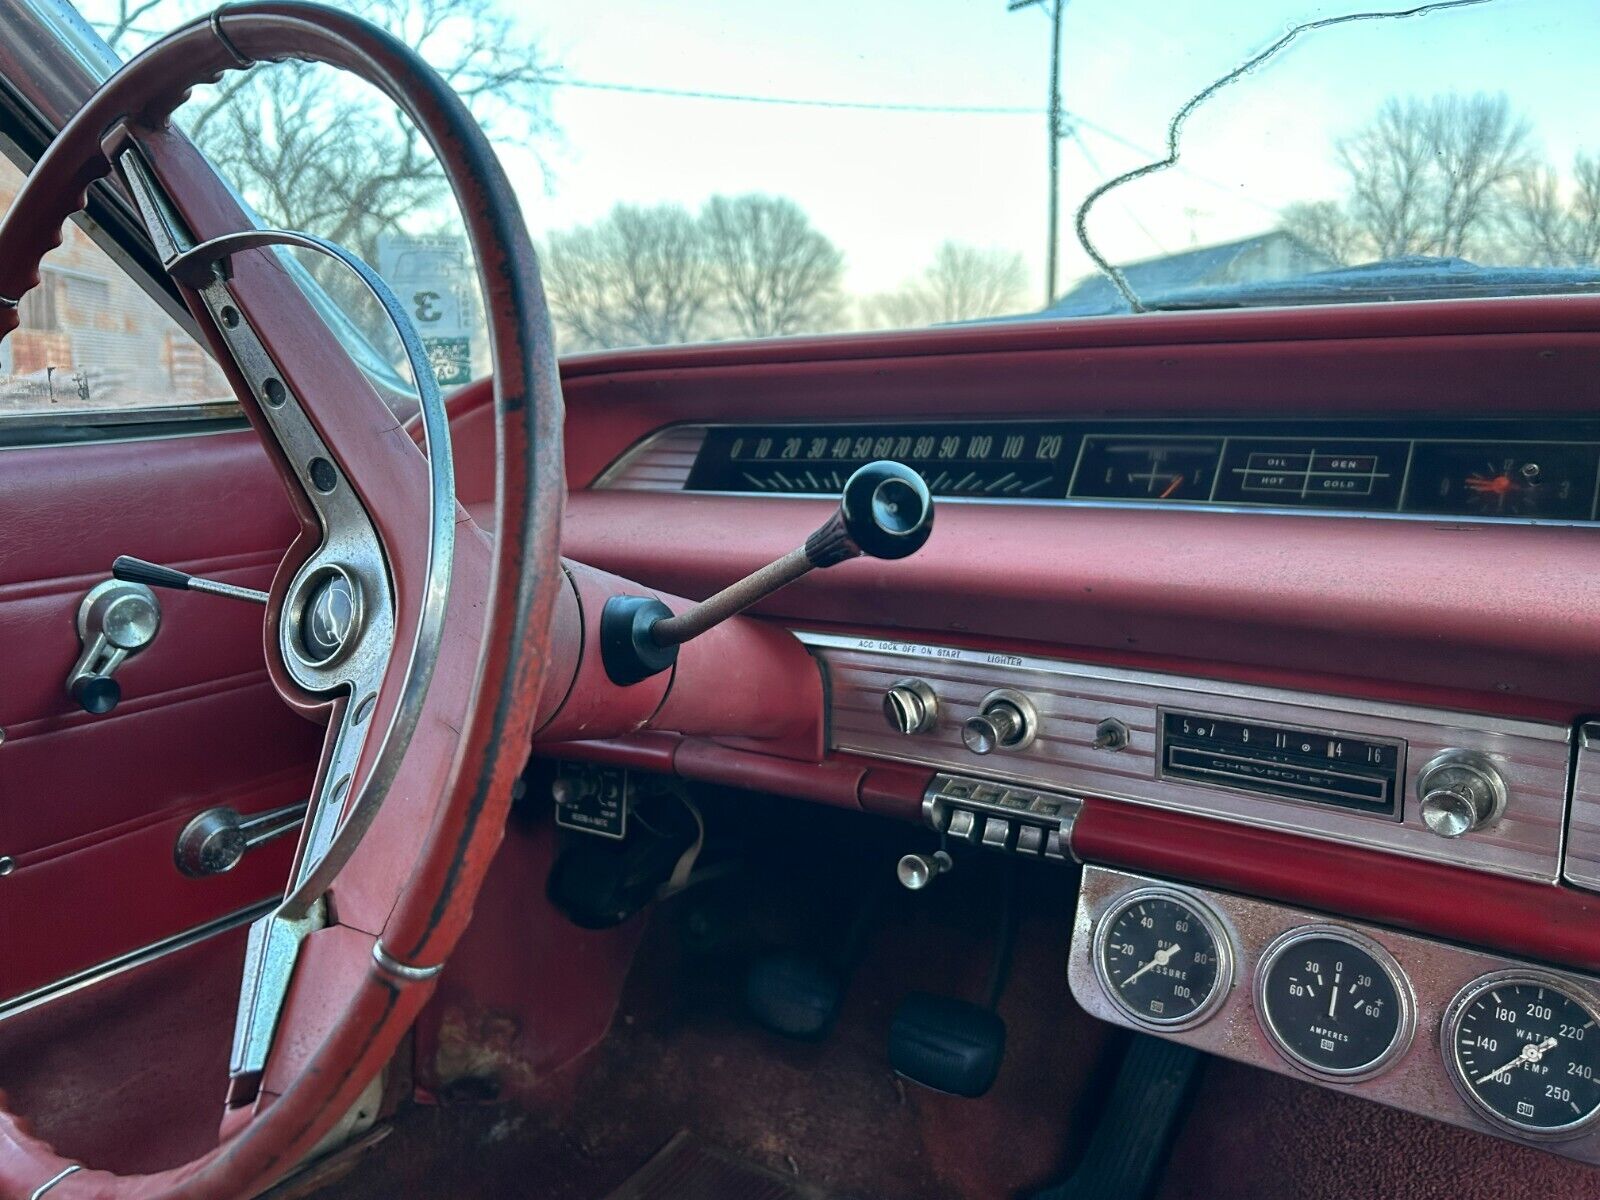 1963 Impala: Classic American Design and Performance